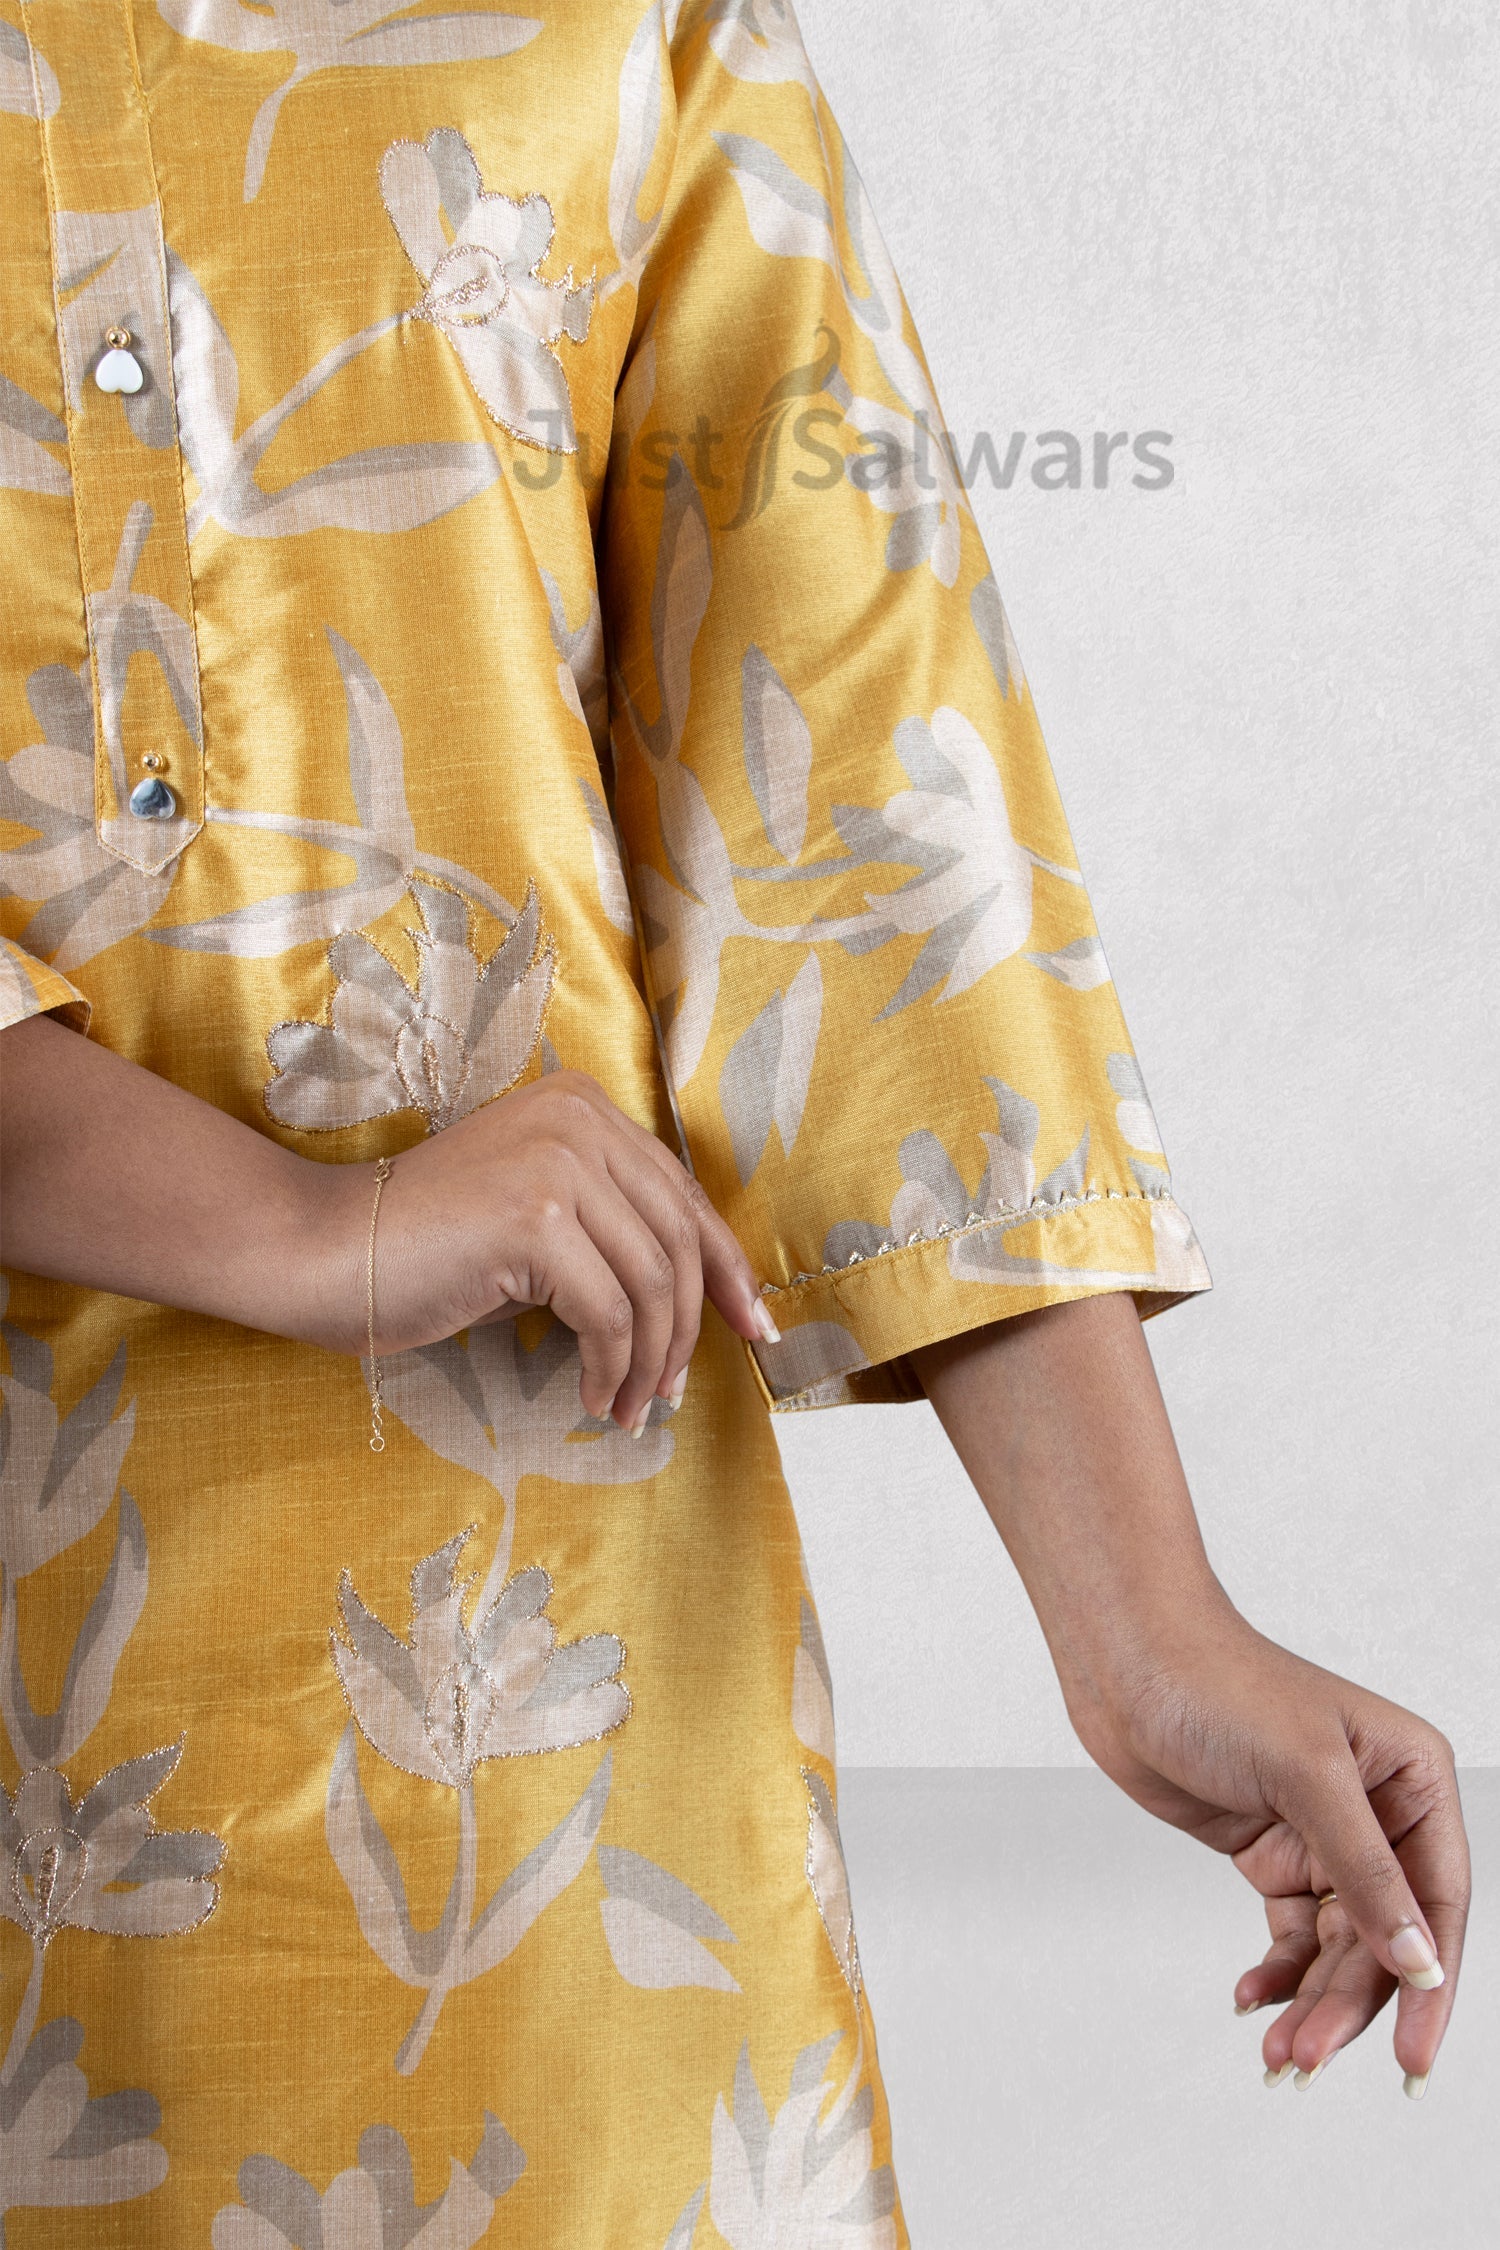 Yellow and Grey Colour Silk Cotton Straight Cut Salwar Suit -Salwar Suit- Just Salwars